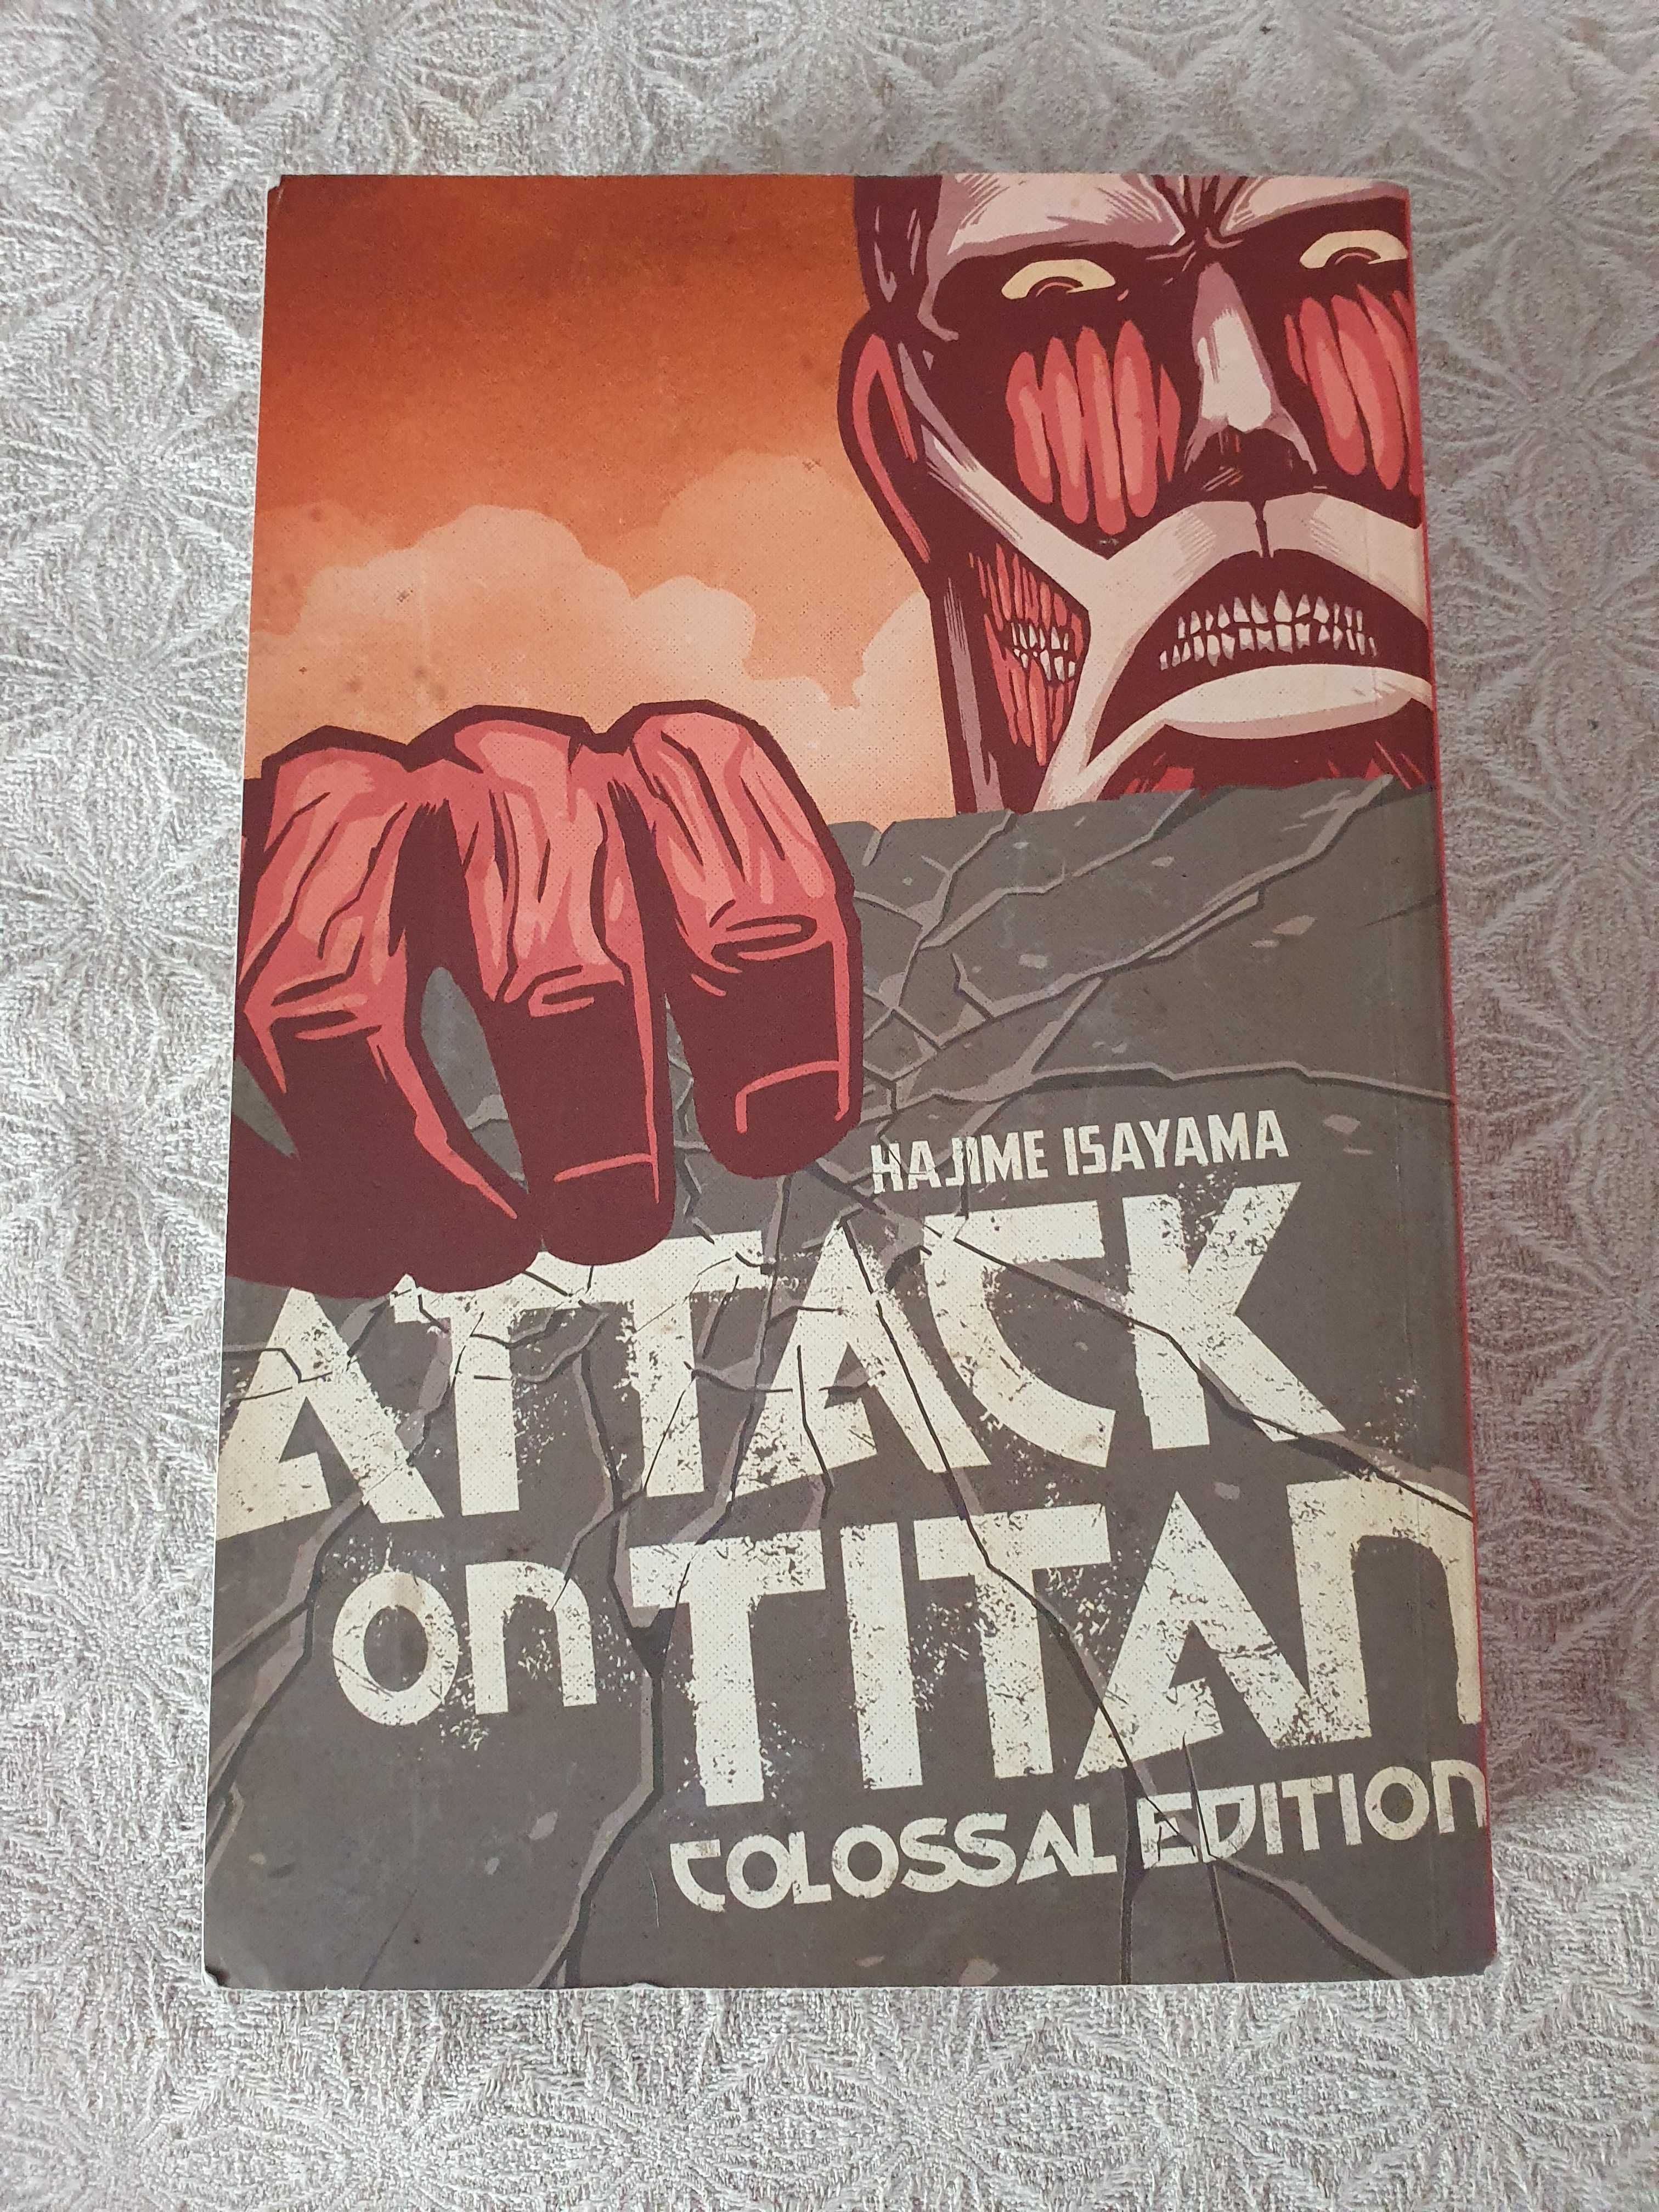 Attack on Titan Colossal Edition vol 1-3 Kodansha Comics Manga